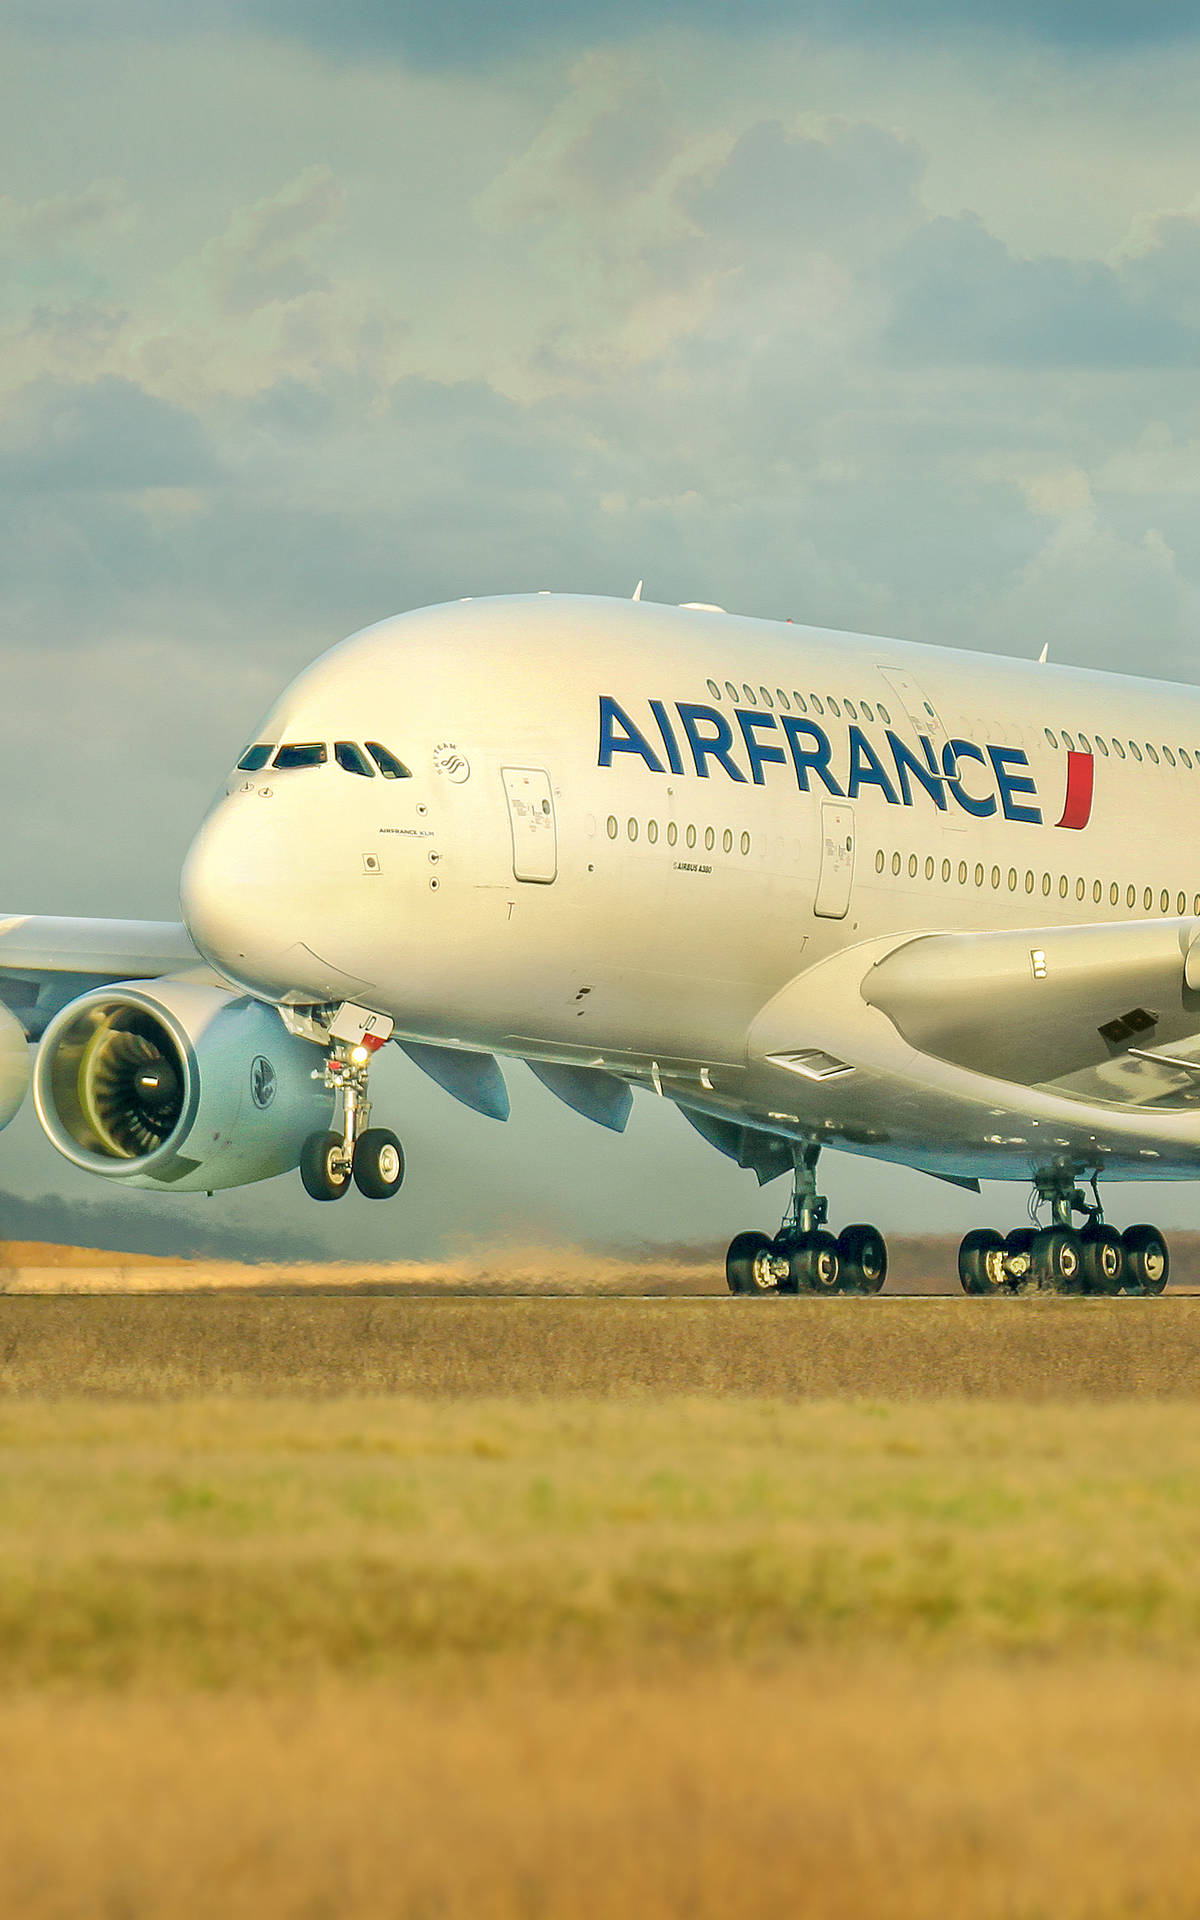 Air France luftfartsselskab Airbus A380 på rullebanen ved solnedgang Wallpaper